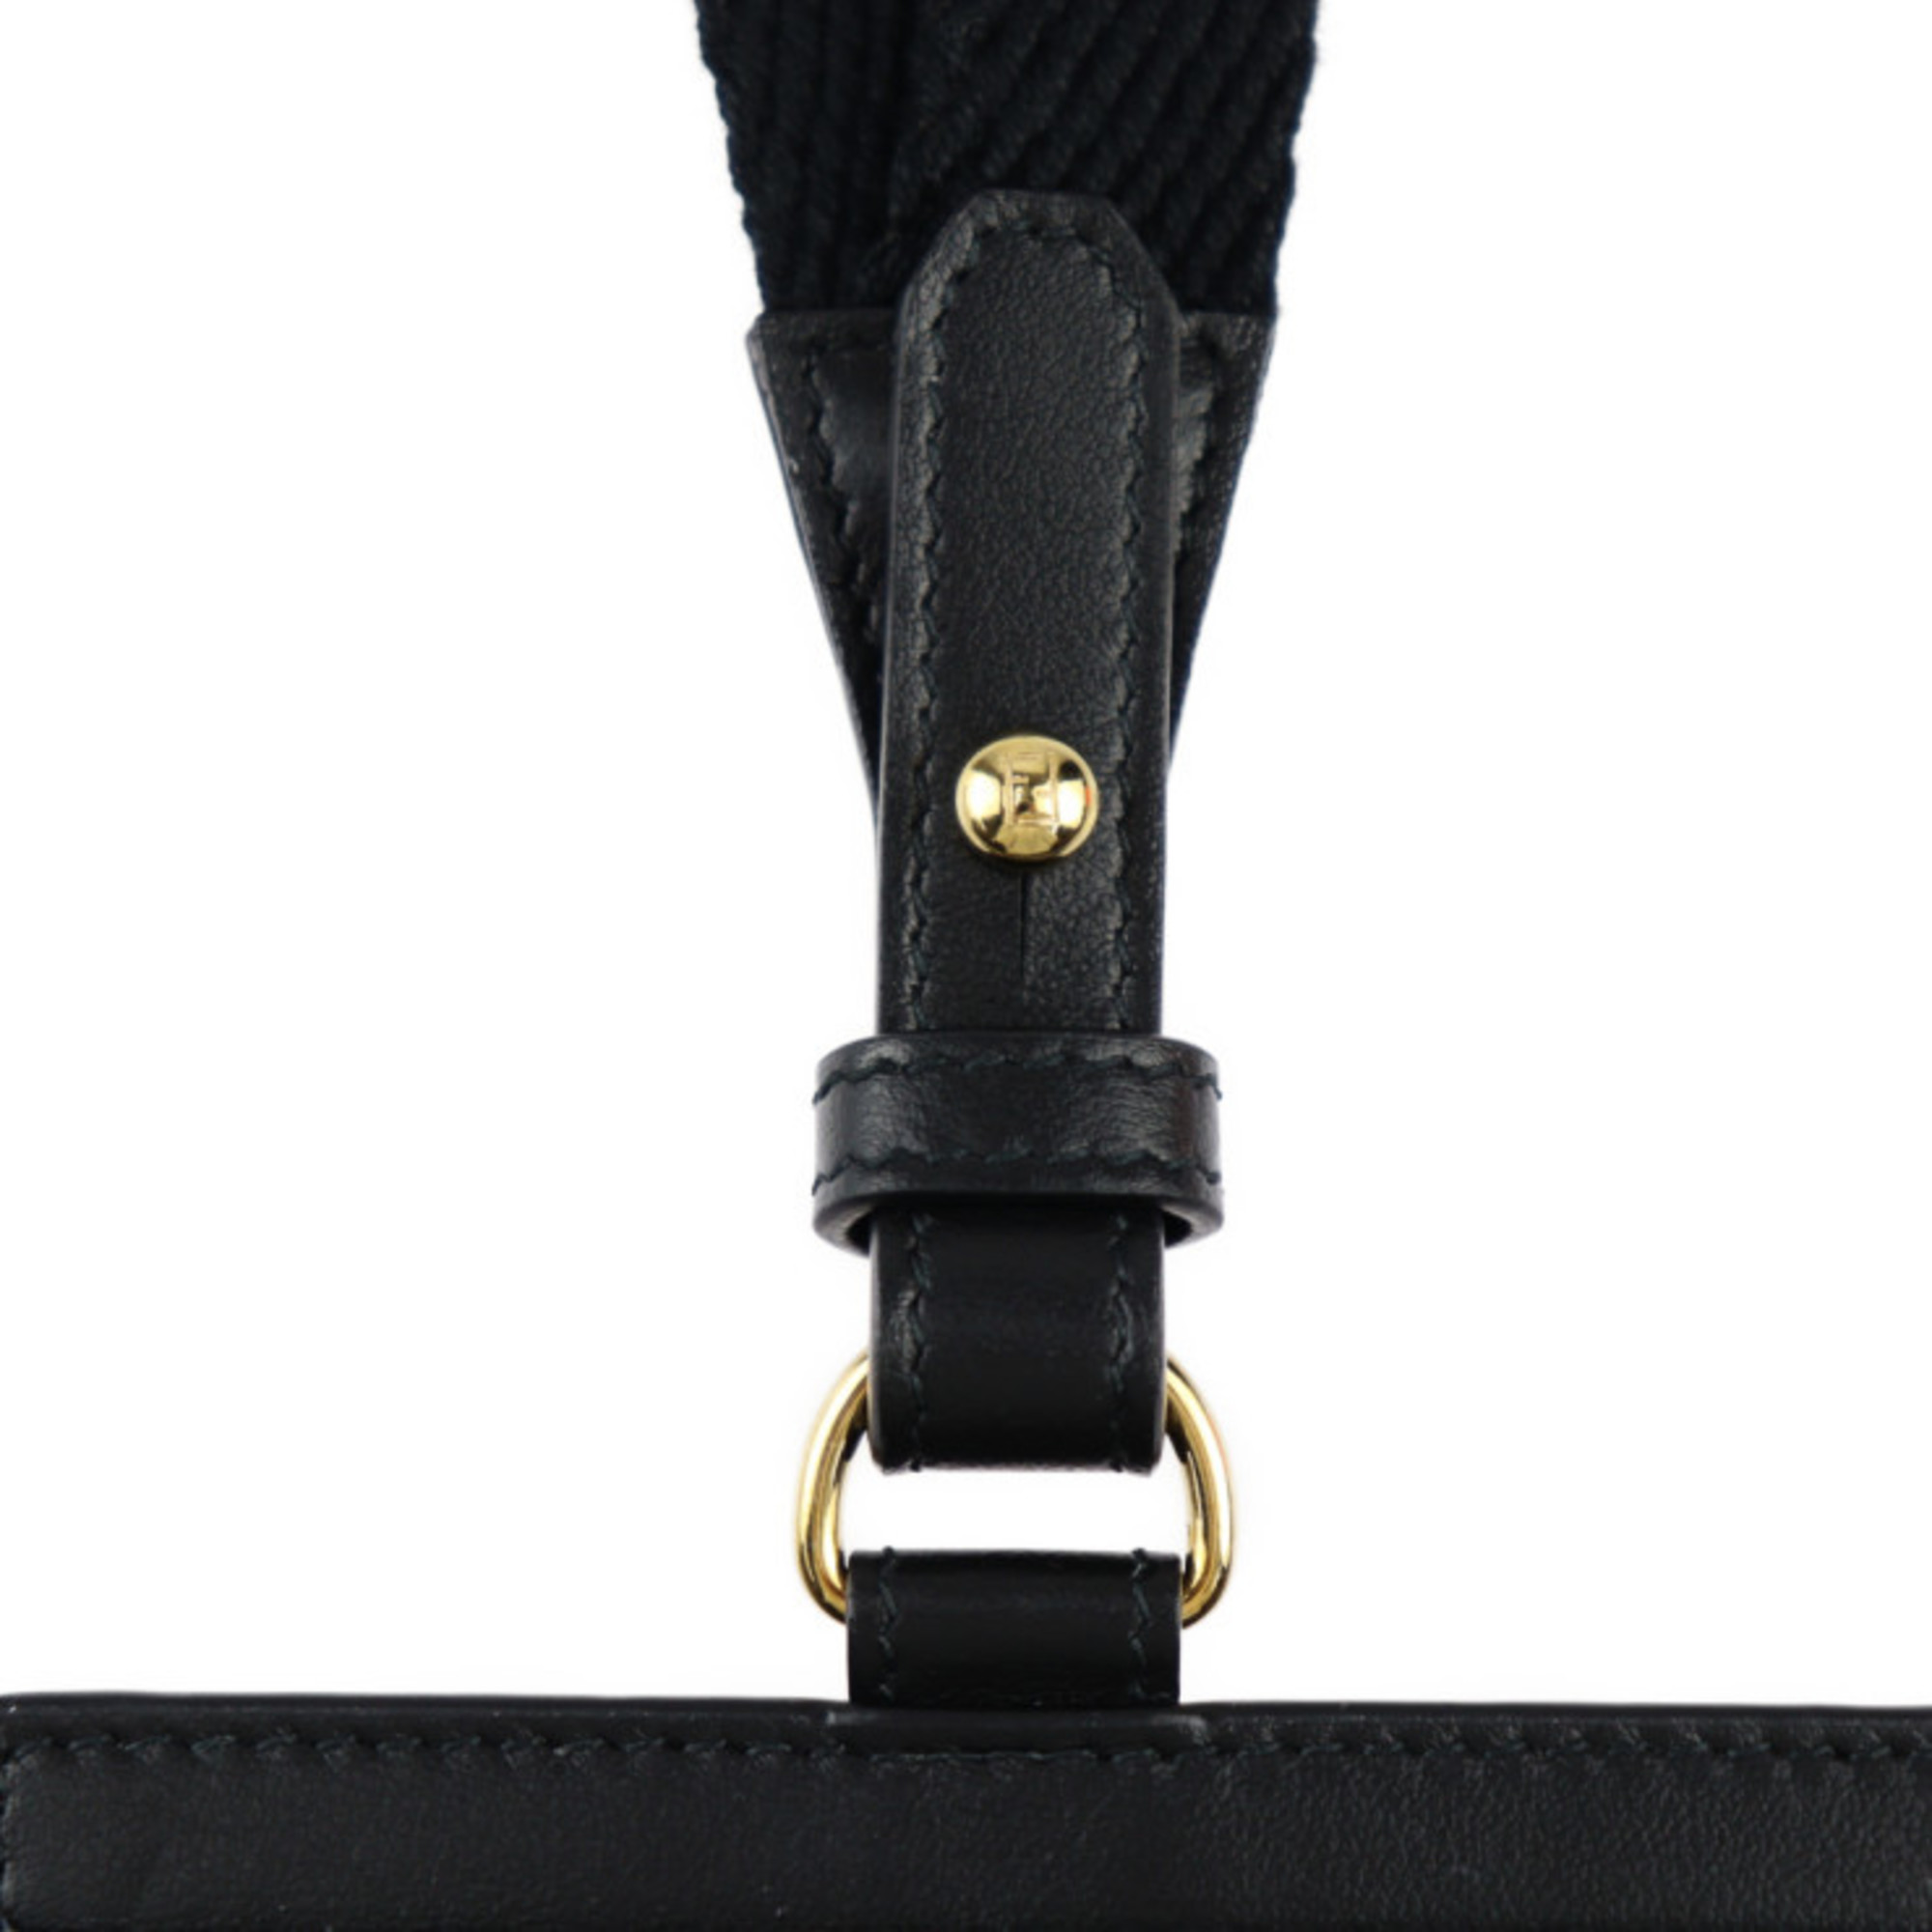 FENDI FENDACE Card Case 7M0331 Calf Leather Black Gold versace Versace Collaboration Neck Strap